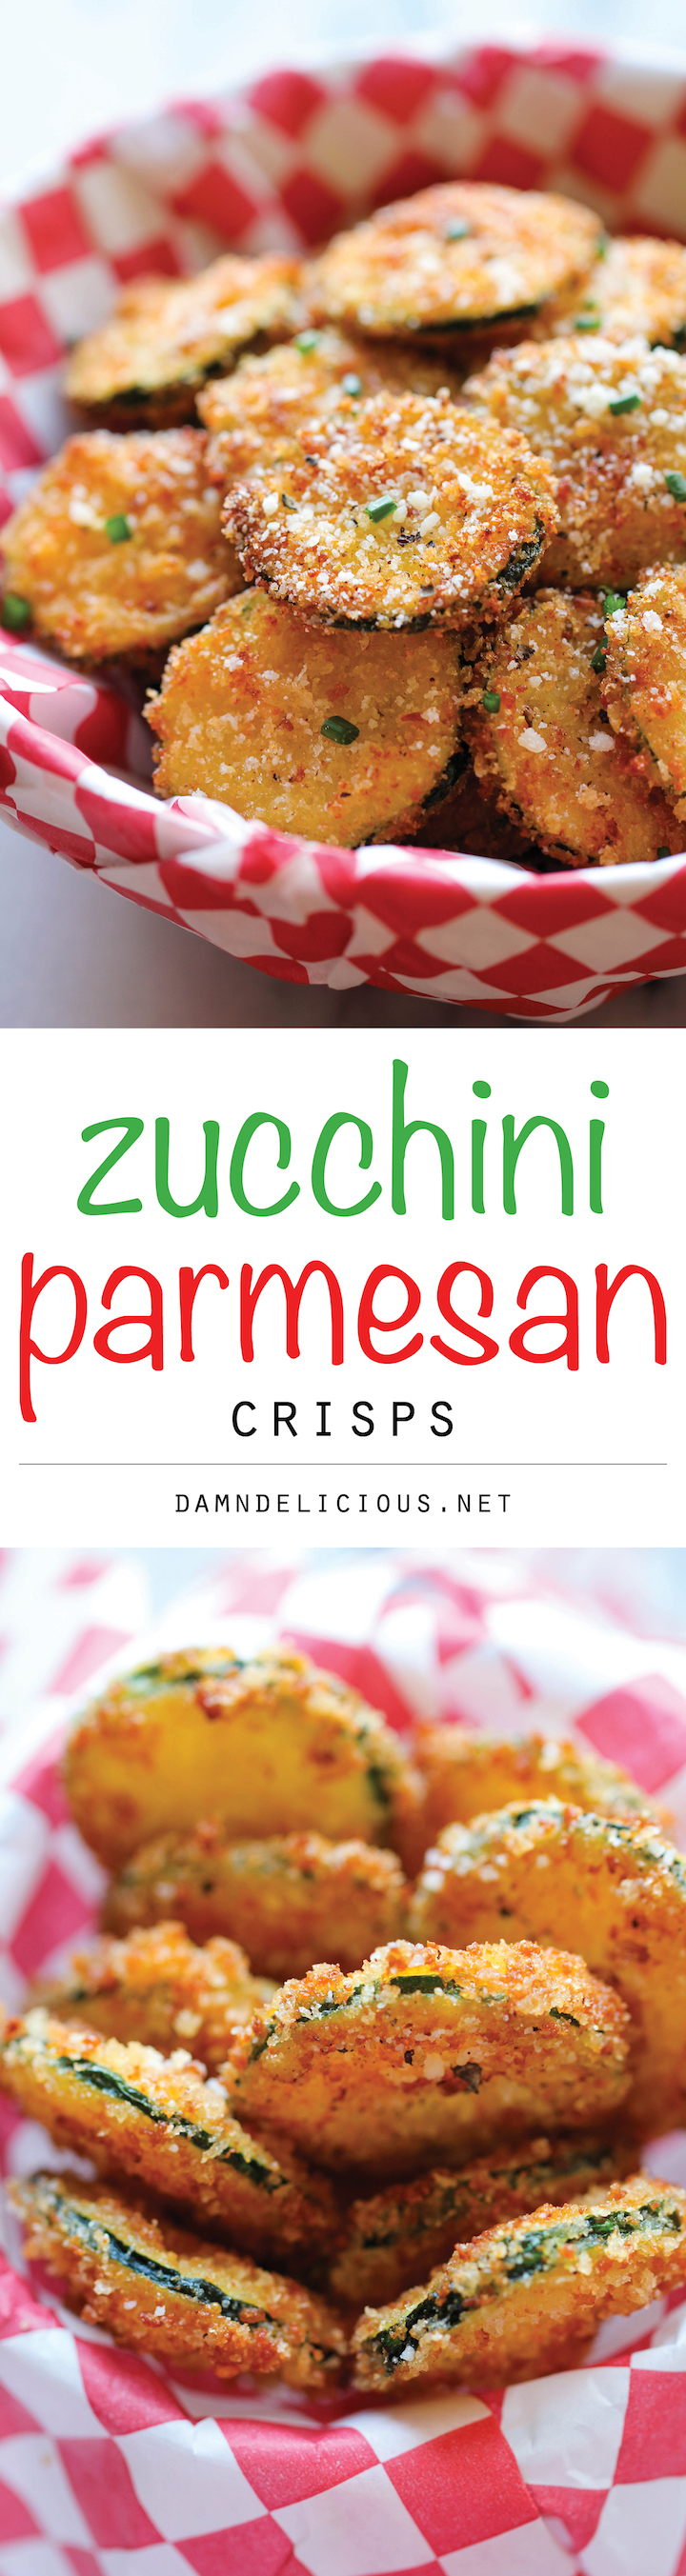 Zucchini Parmesan Crisps Damn Delicious